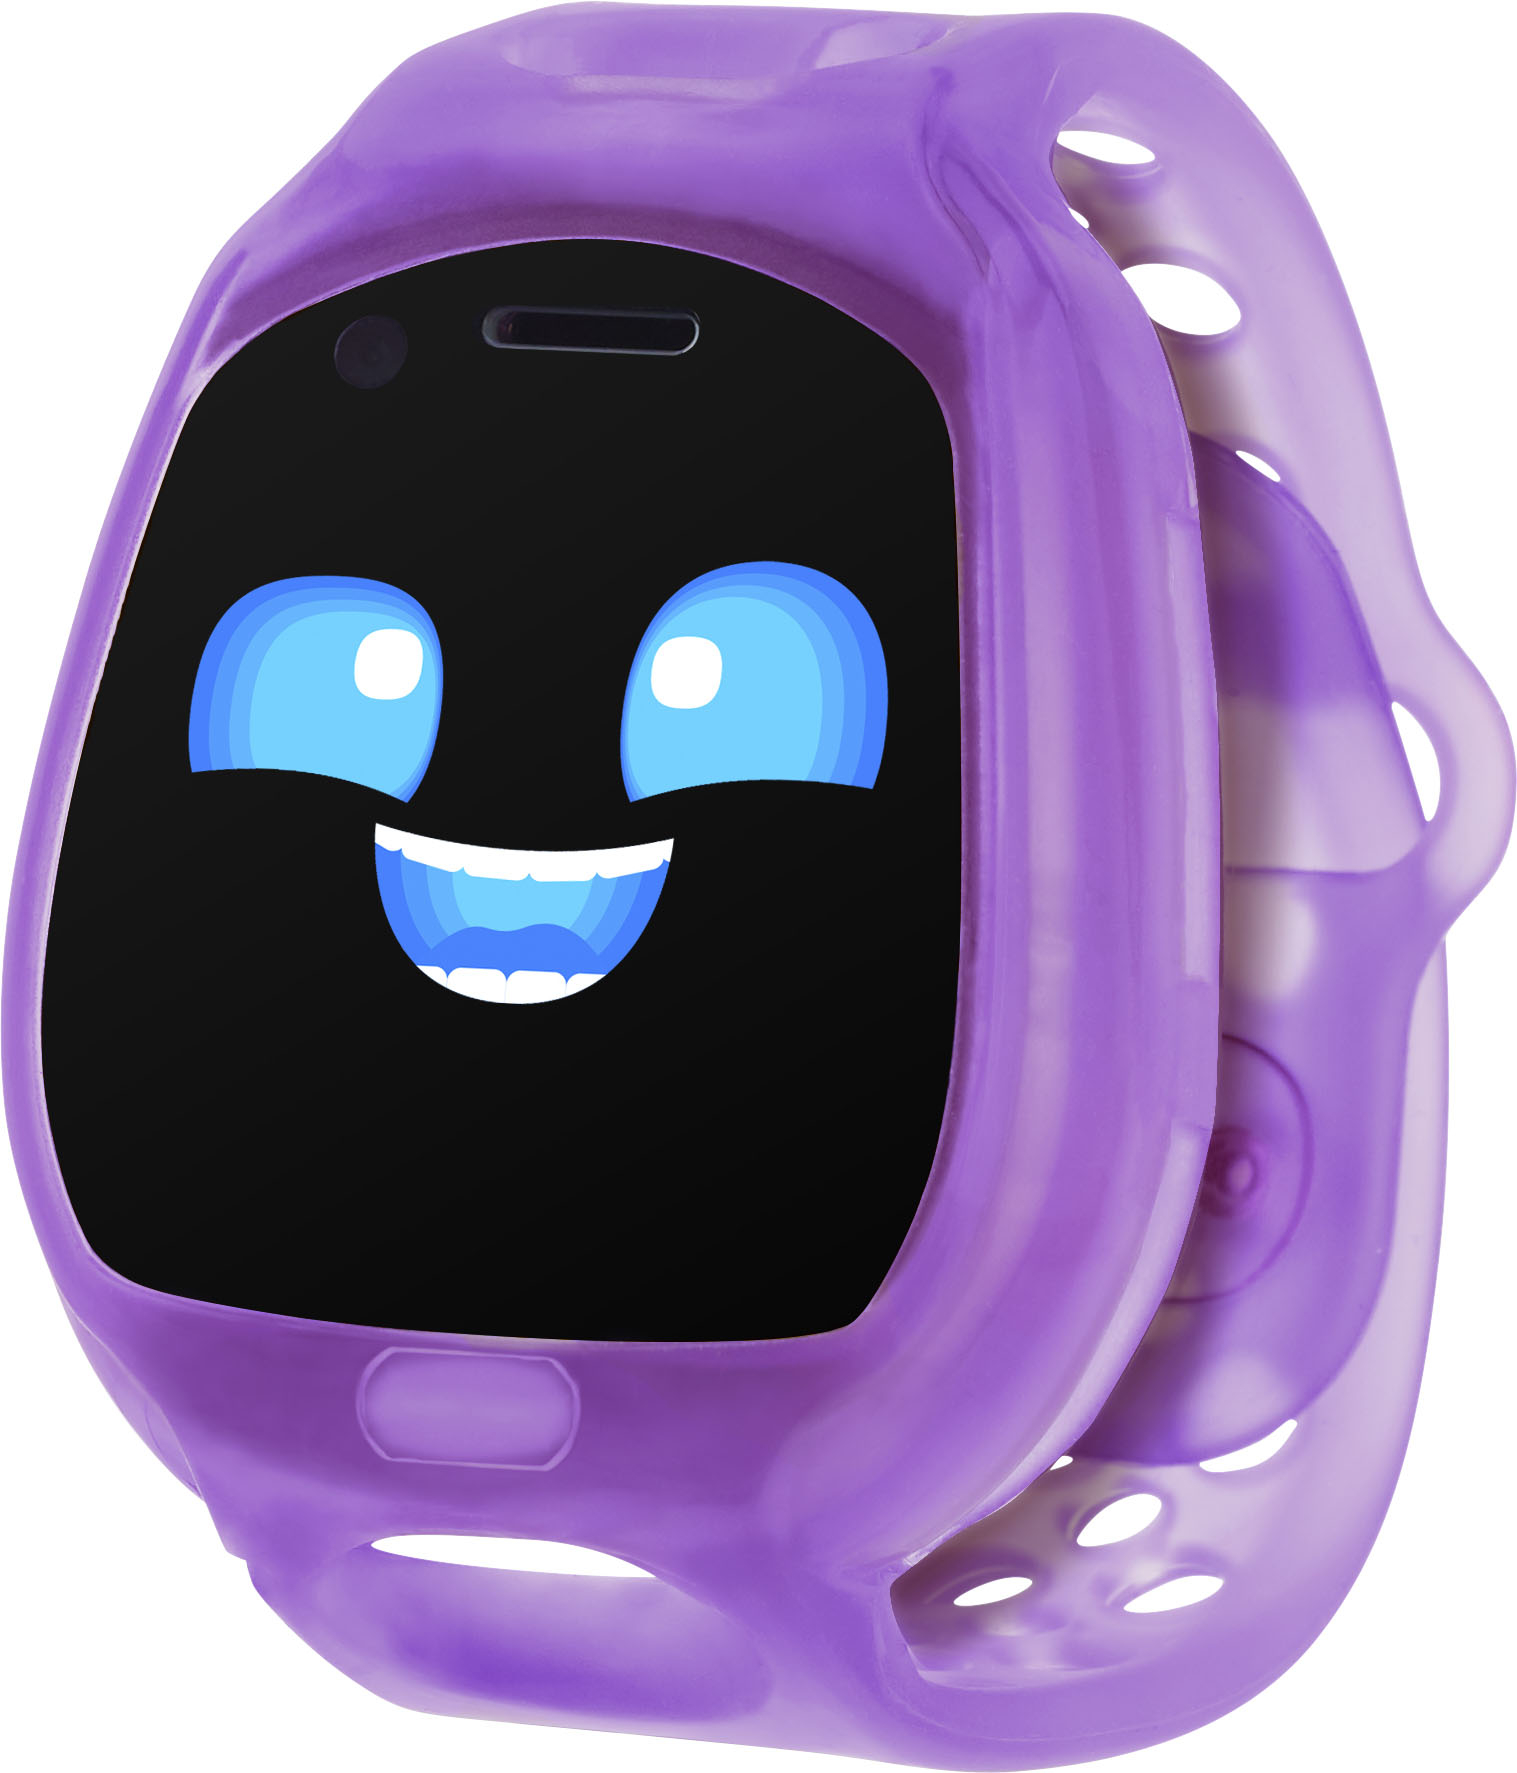 Little Tikes - Tobi 2 Robot Smartwatch - Purple